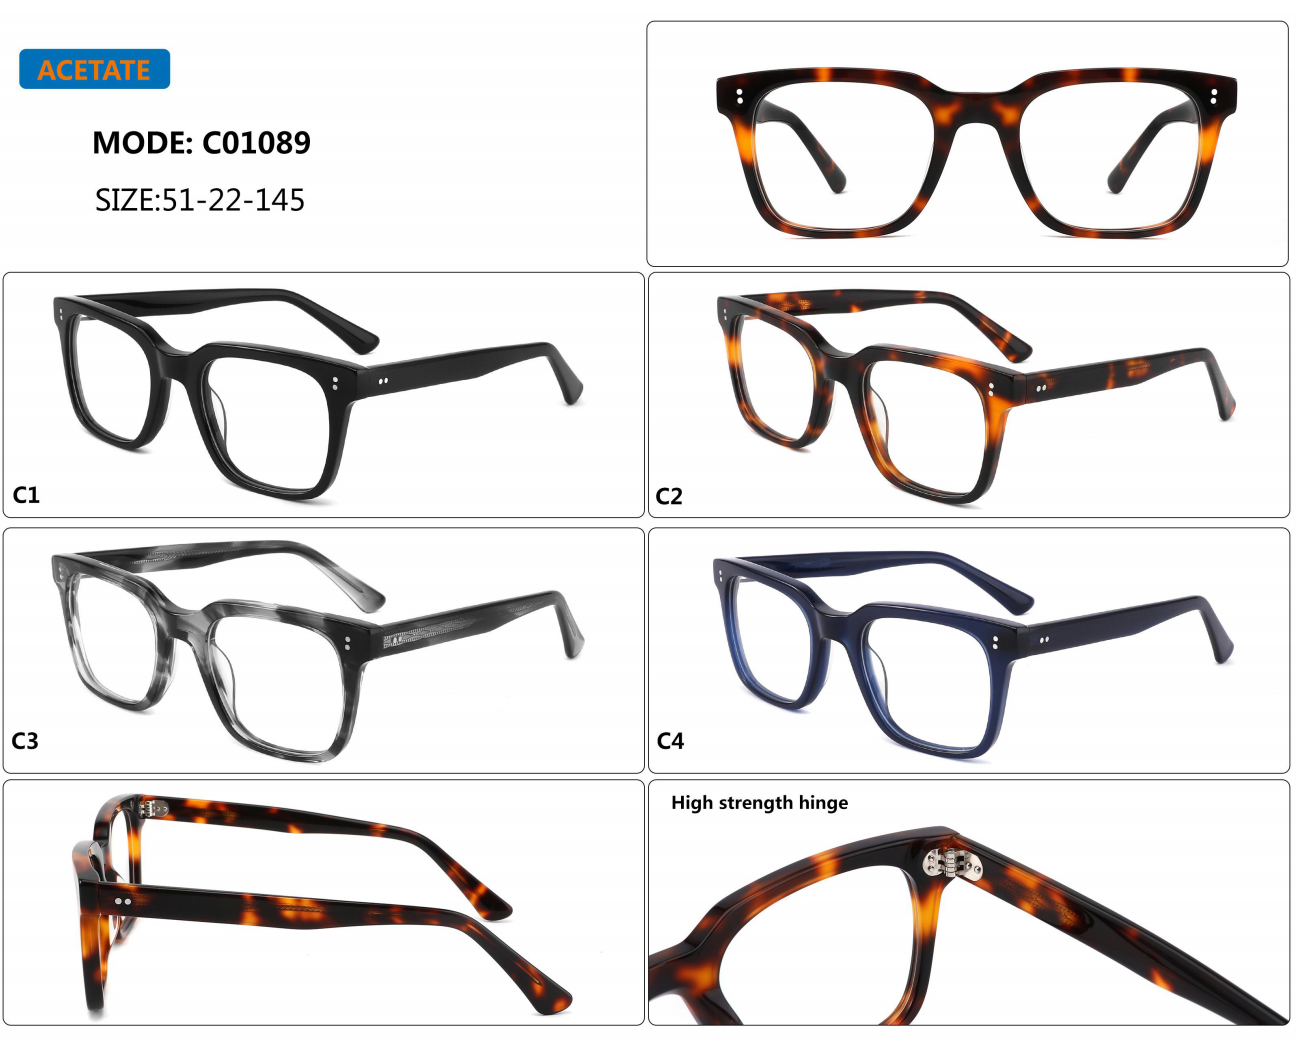 Square Frames Gensun Eyewear Frames Eyewear Frames Manufacturers Spectacle Frame Suppliers